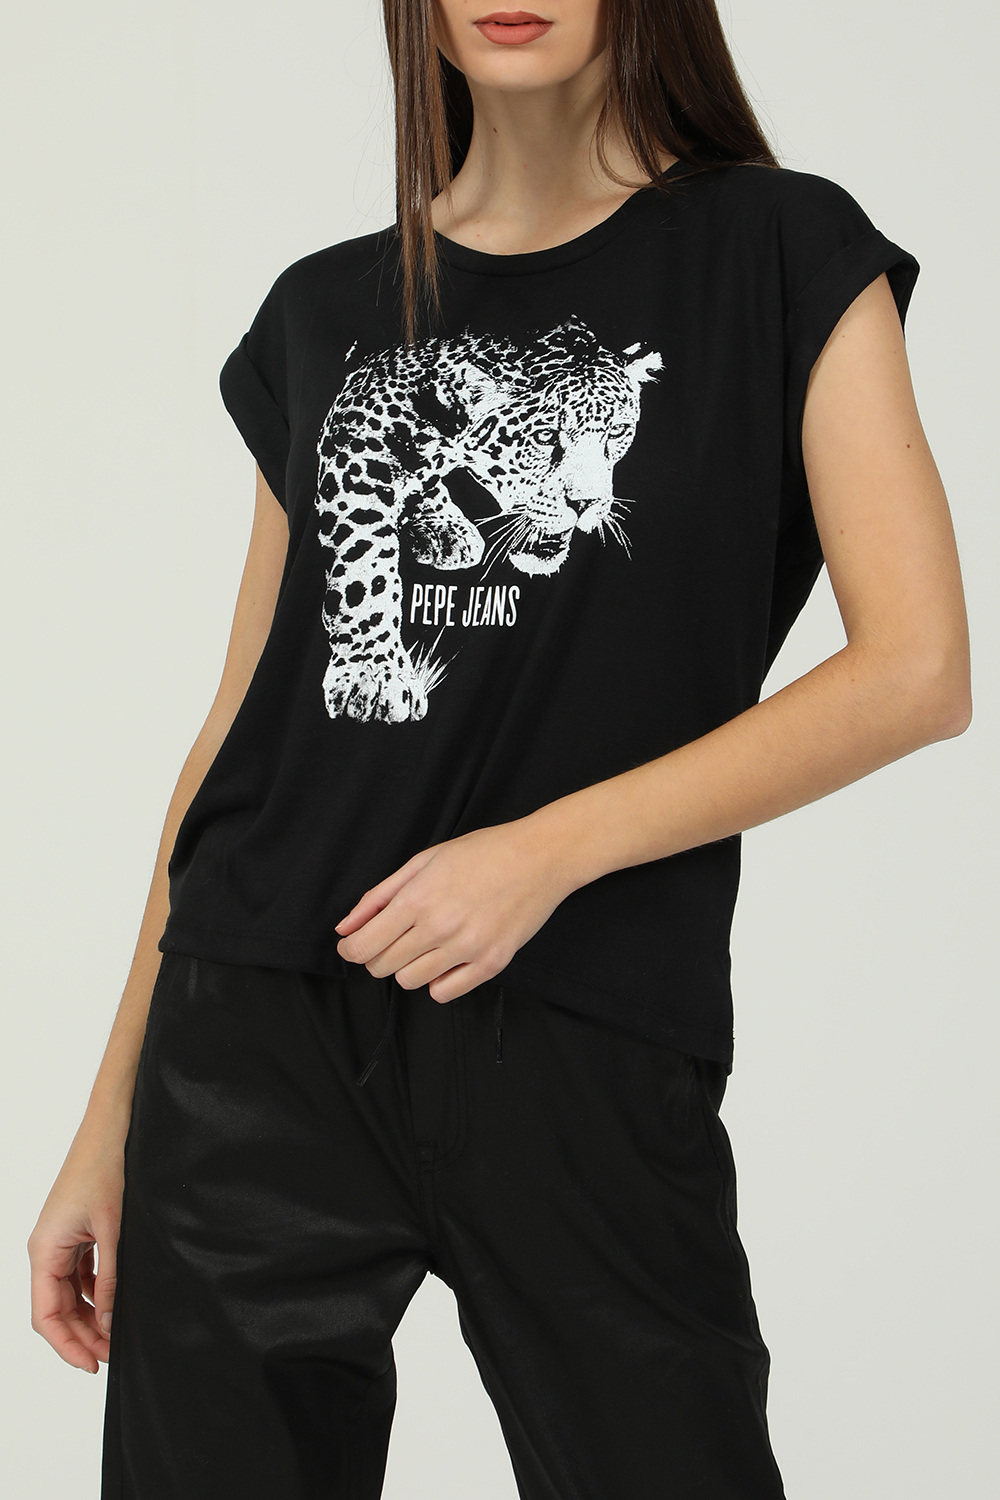 PEPE JEANS – Γυναικεία κοντομάνικη μπλούζα PEPE JEANS PANTI μαύρη 1822901.0-0080